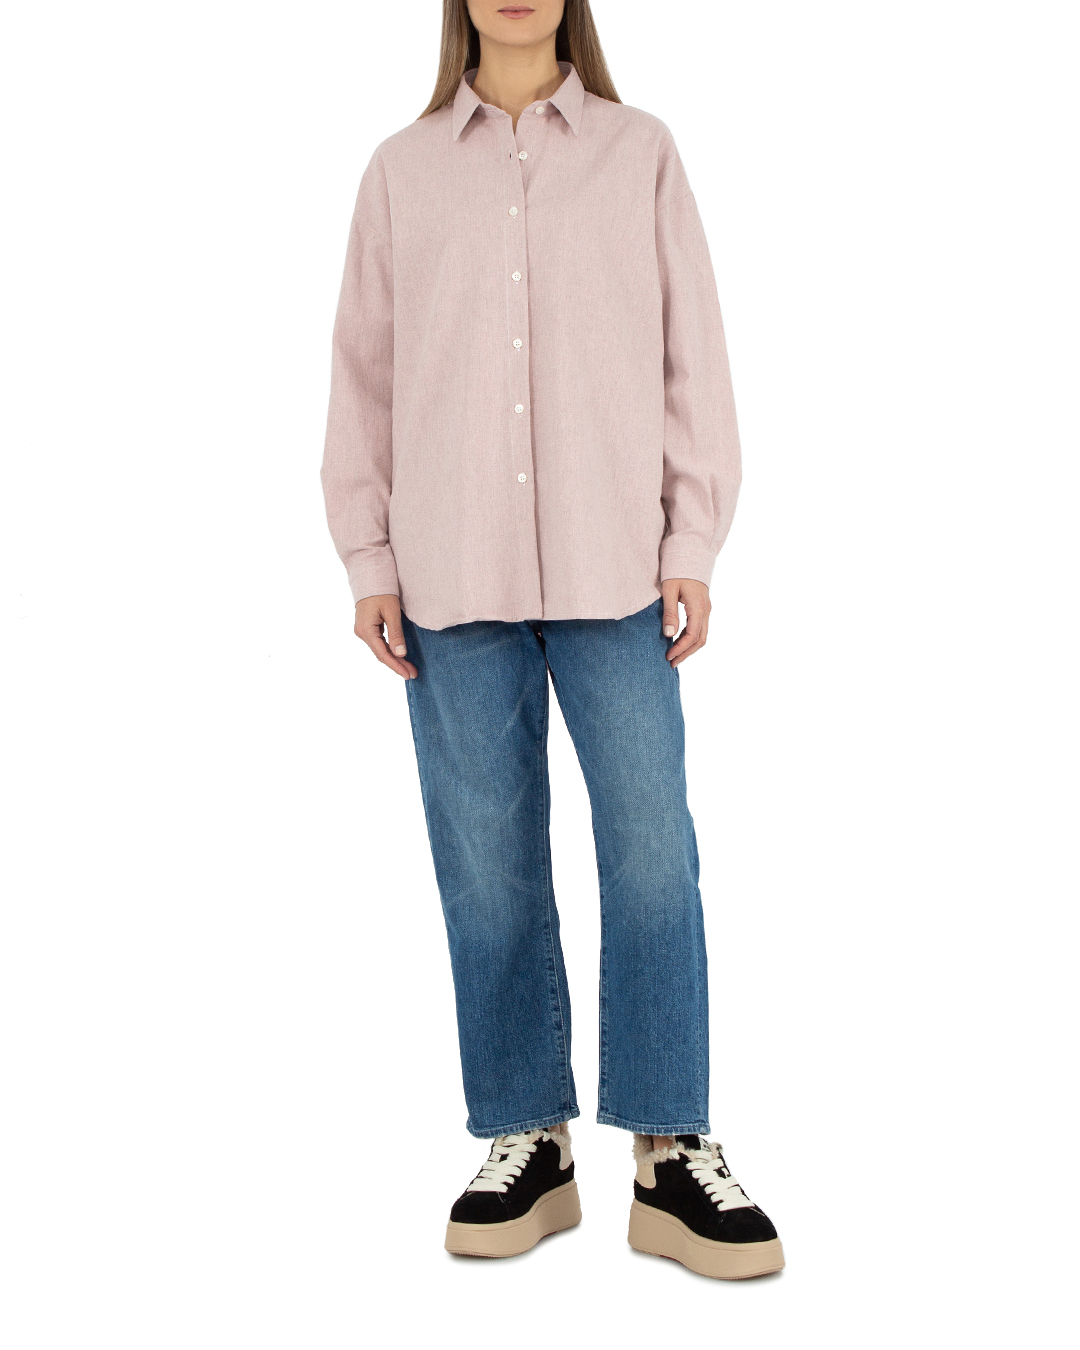 хлопковая рубашка ANTELOPE THE LABEL A2.822 св.розовый l, размер l - фото 2